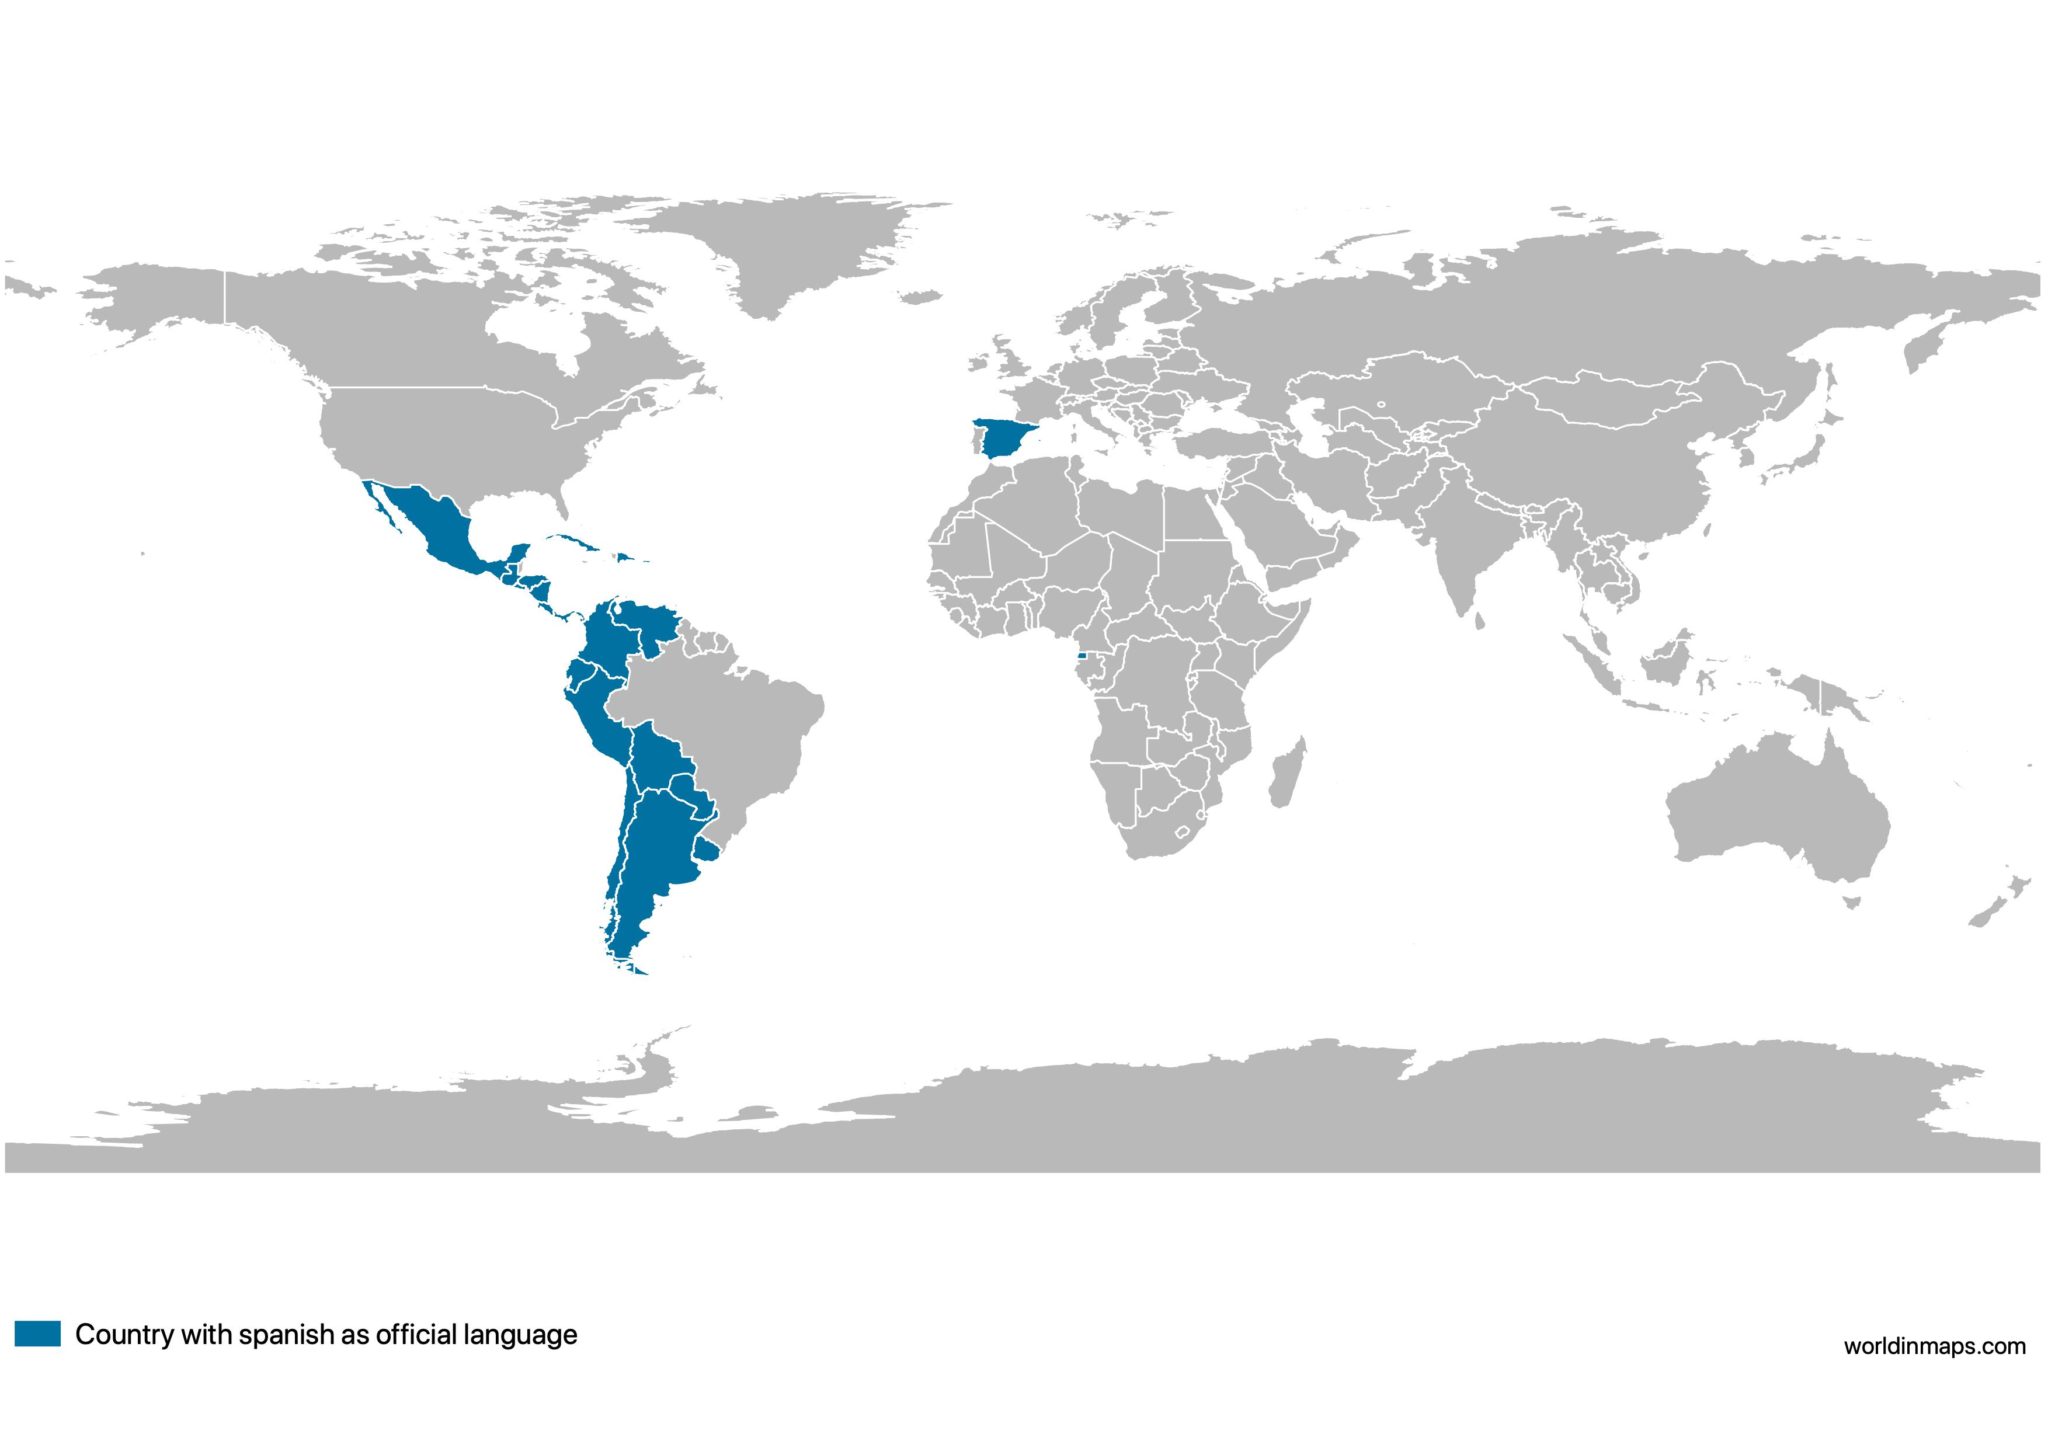 spanish-speaking-countries-world-in-maps